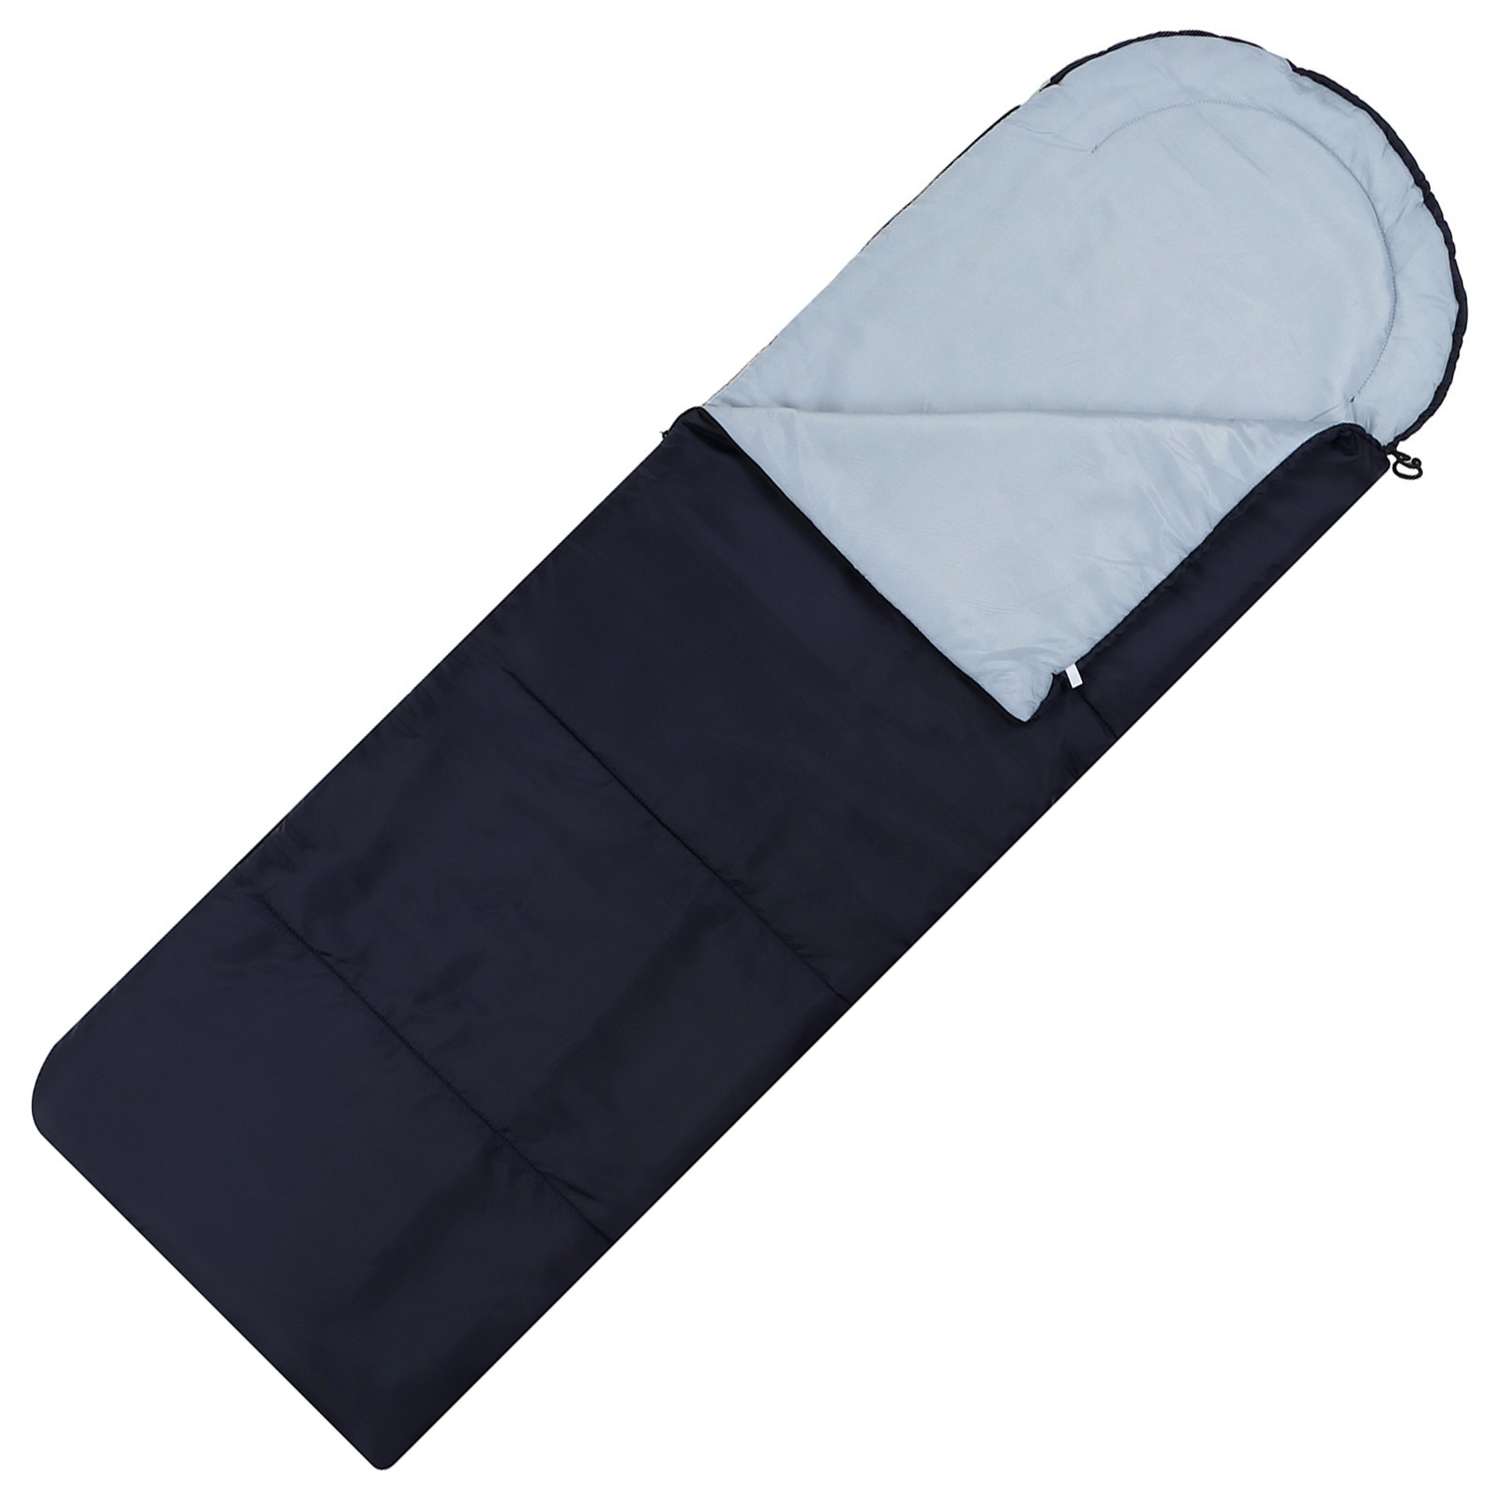 Спальник-одеяло Maclay с подголовником 235х75 см до -5°С - фото 8